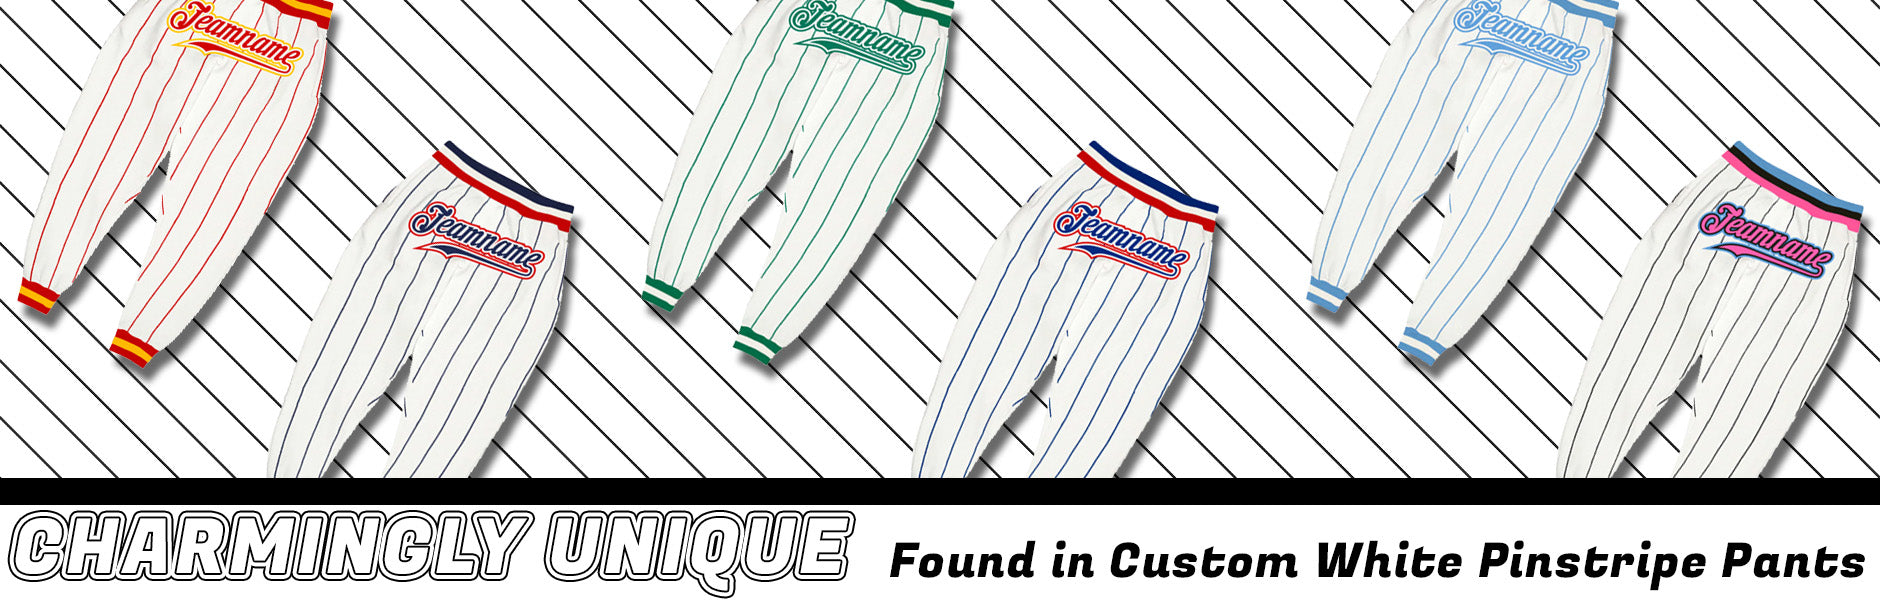 custom white pinstripe pants